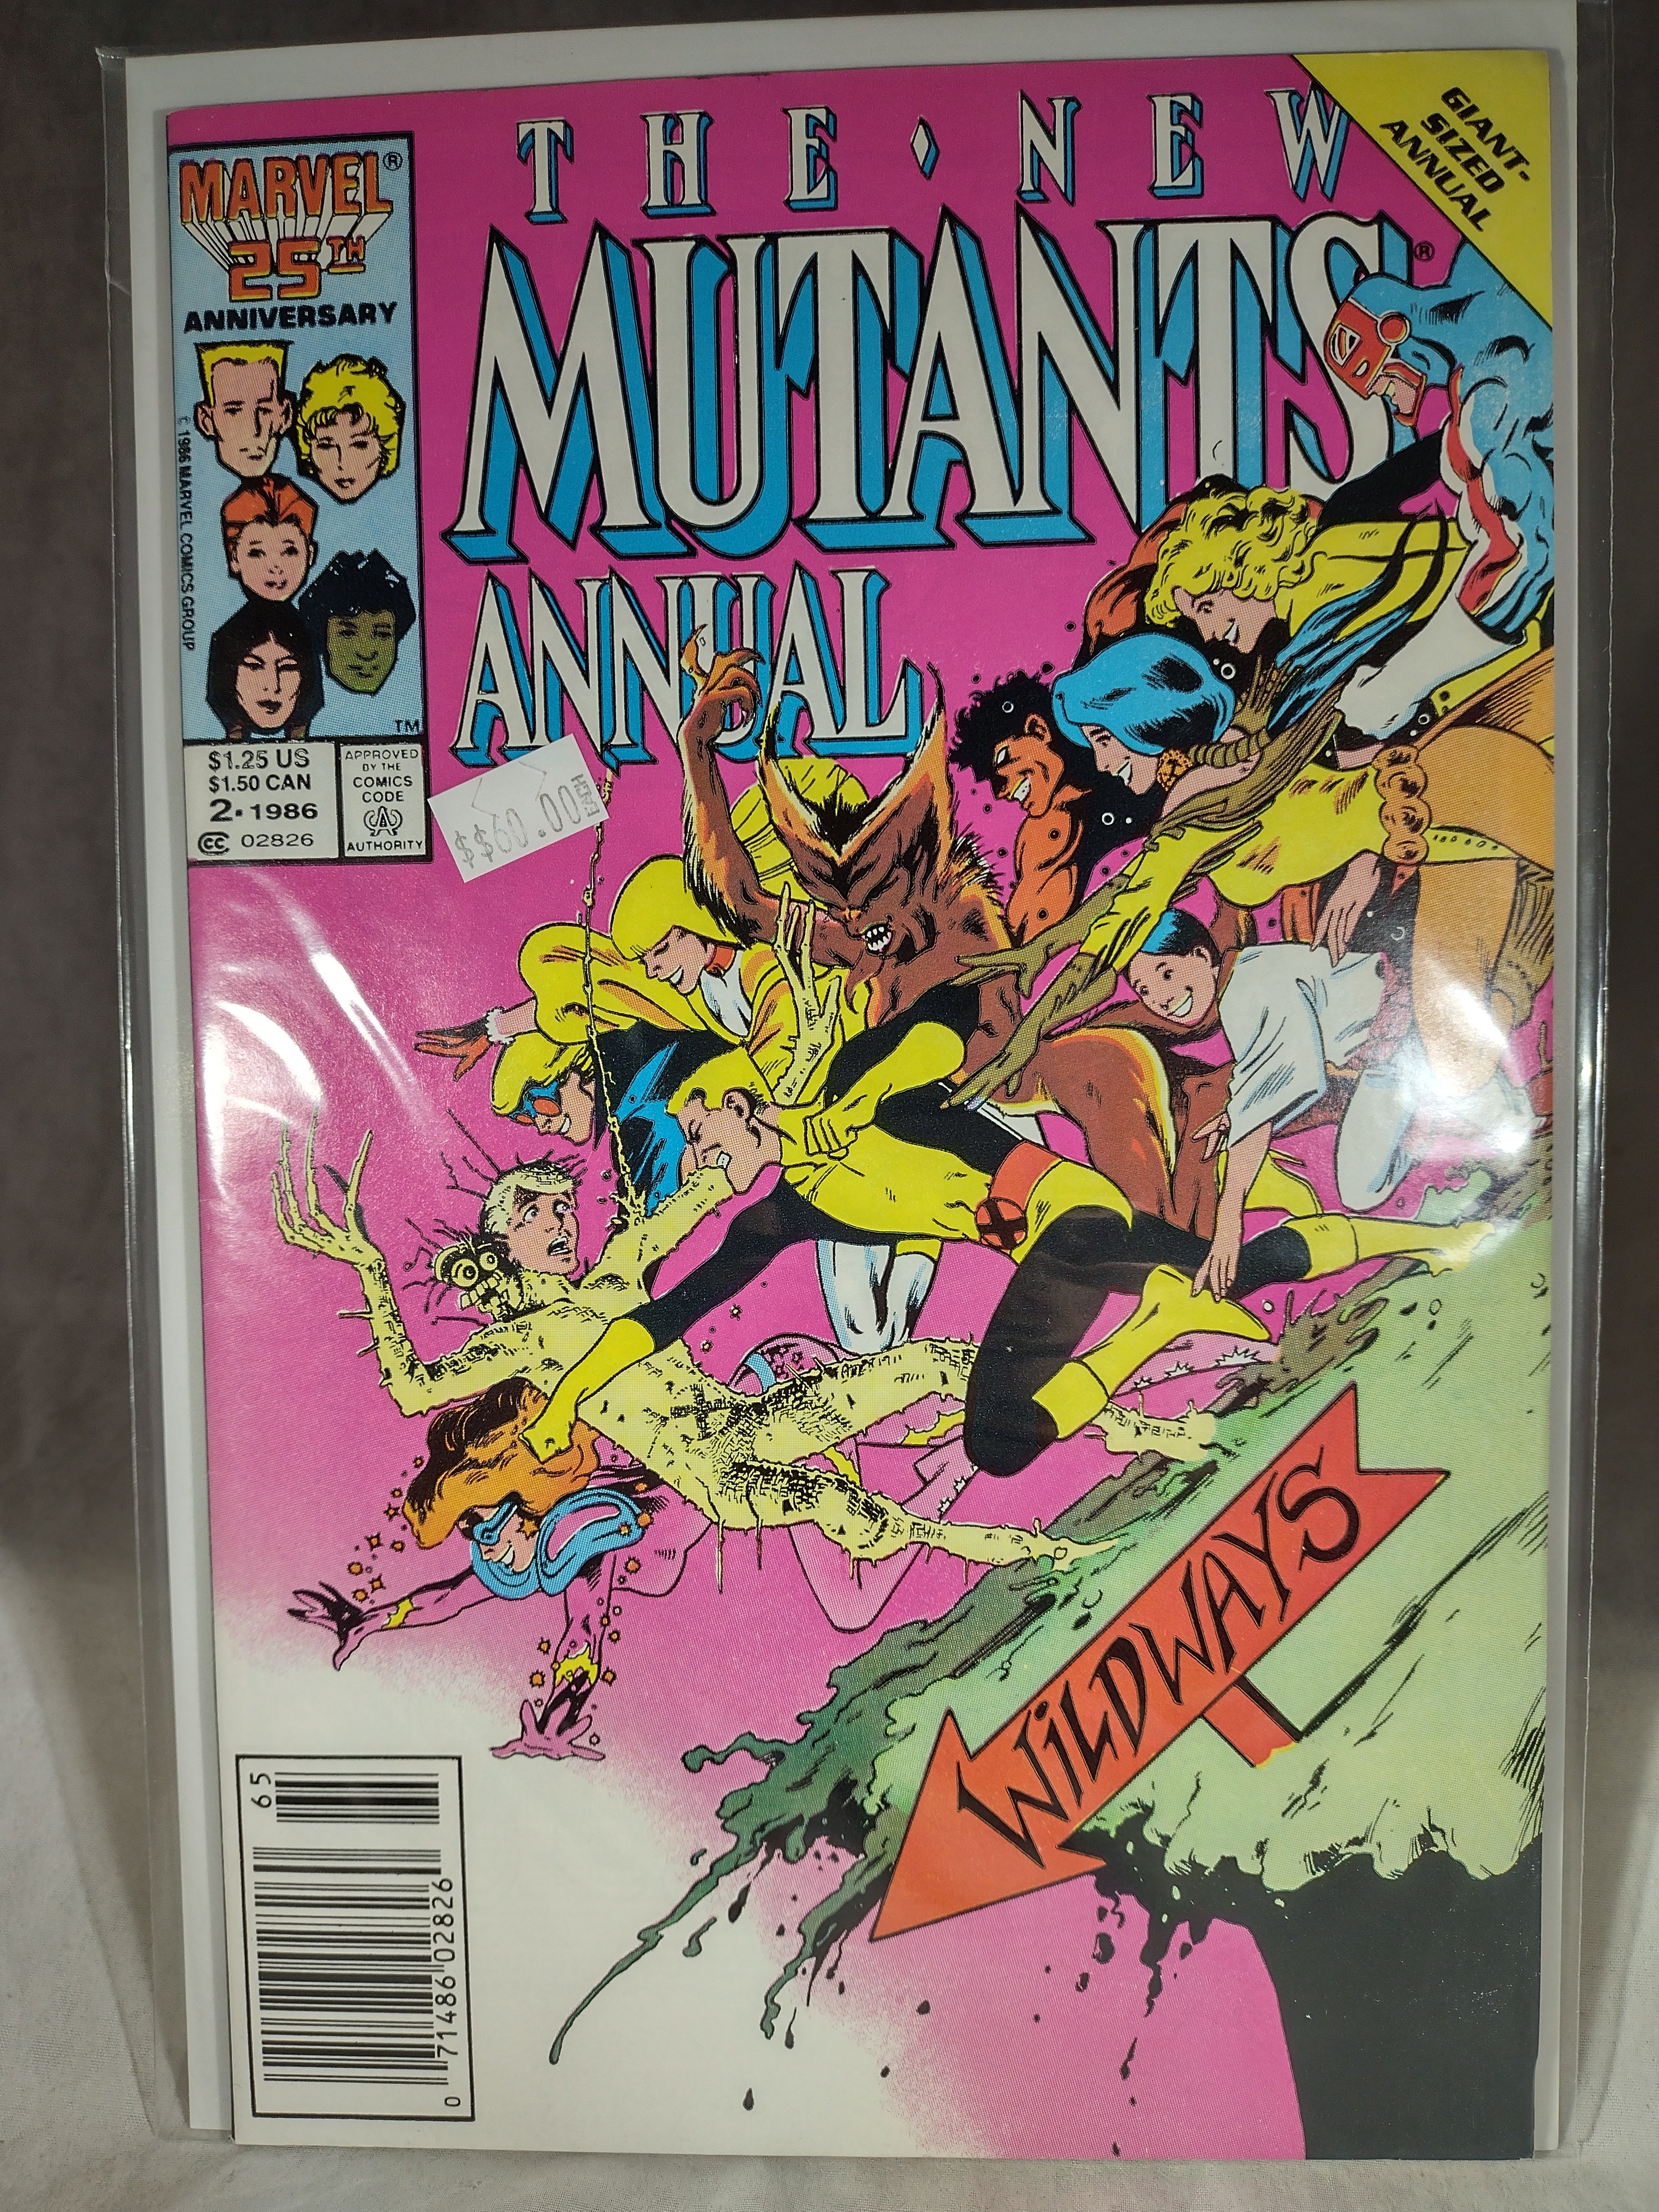 The New Mutants #2 (1983) | Comic Books - Bronze Age, Marvel, Superhero